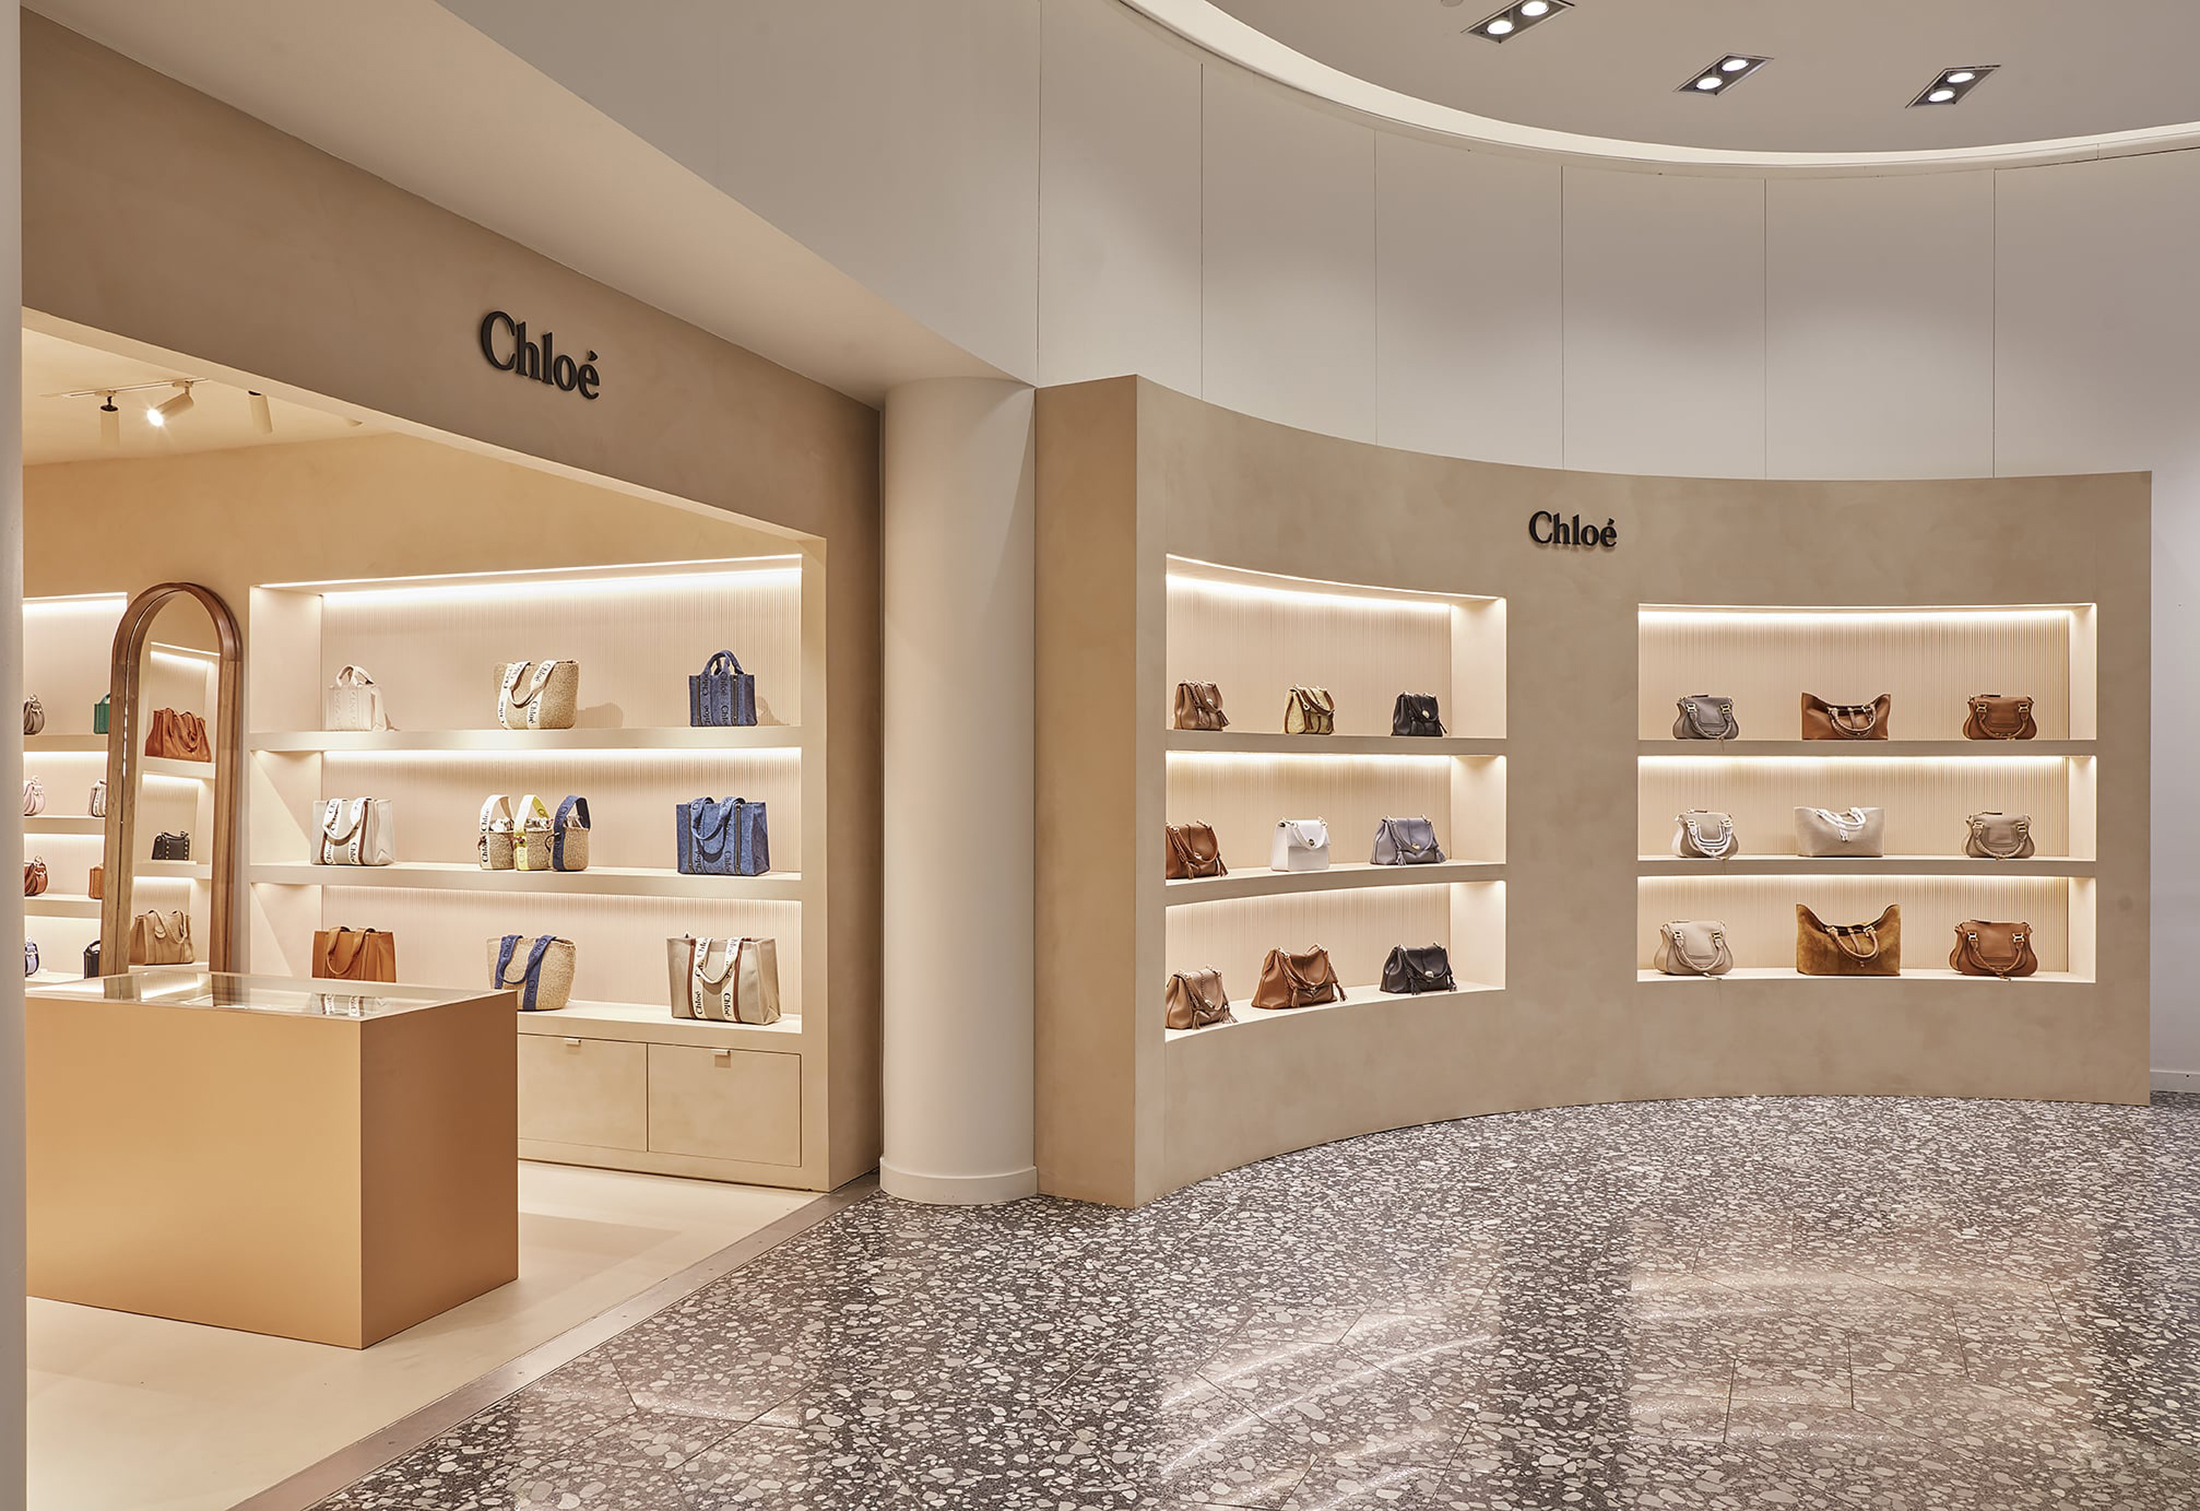 Saks Fifth Avenue unveils new beauty floor in New York store